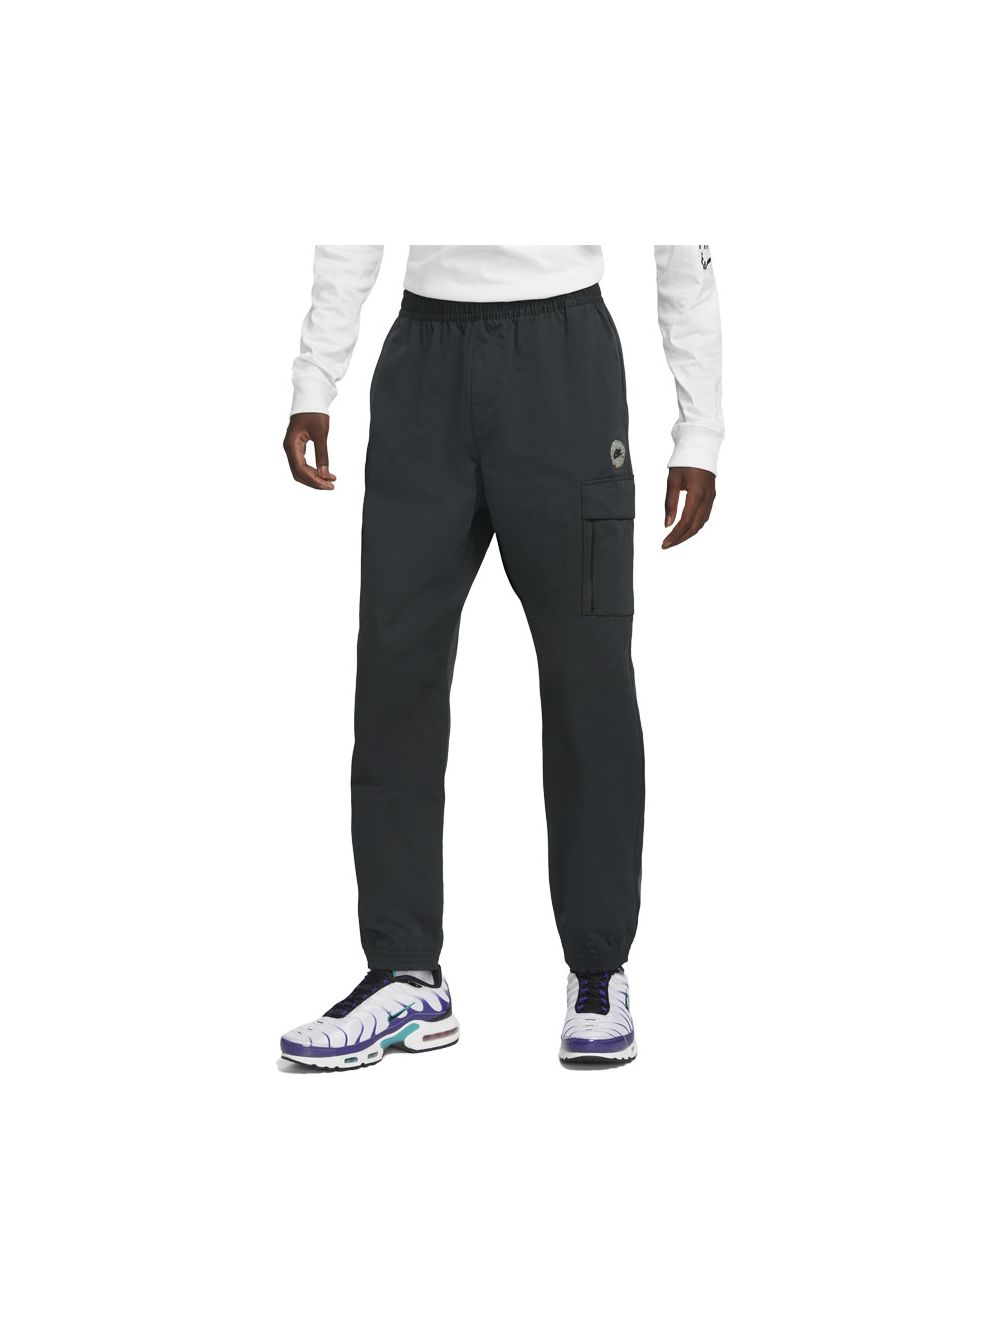 Nike Sportswear SPU Woven Pants Mens Black Blue